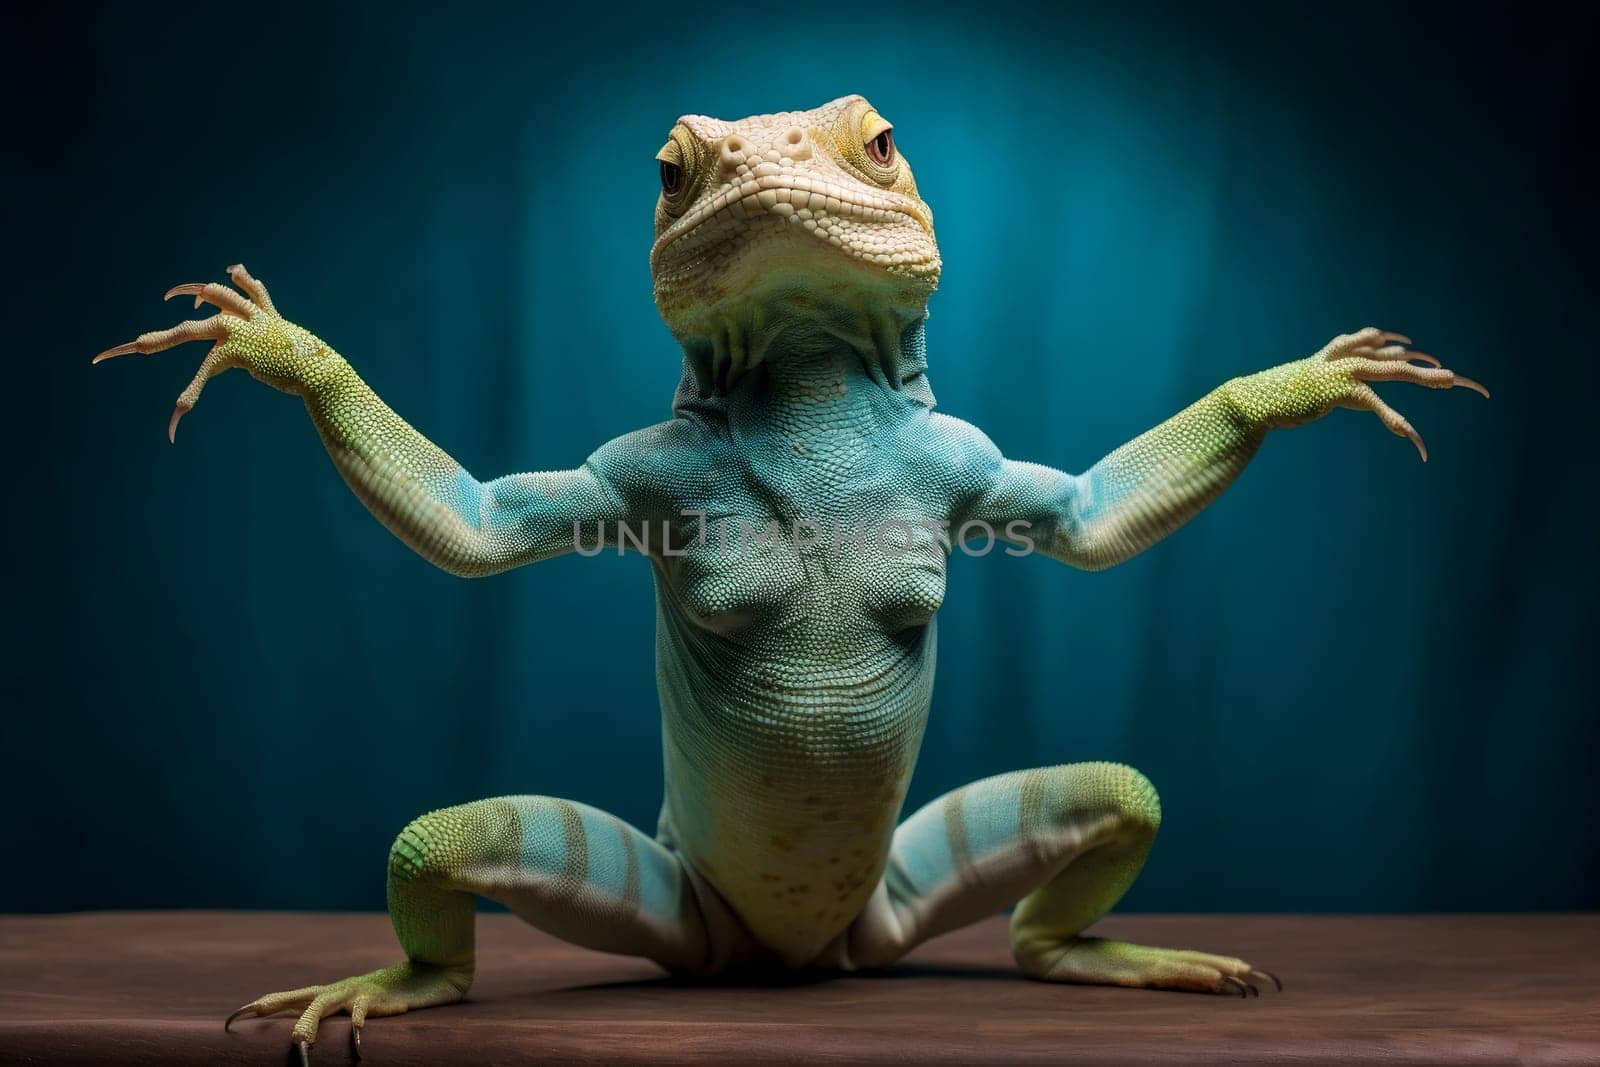 Invigorating Lizard pose fun. Reptile wild pose. Generate Ai